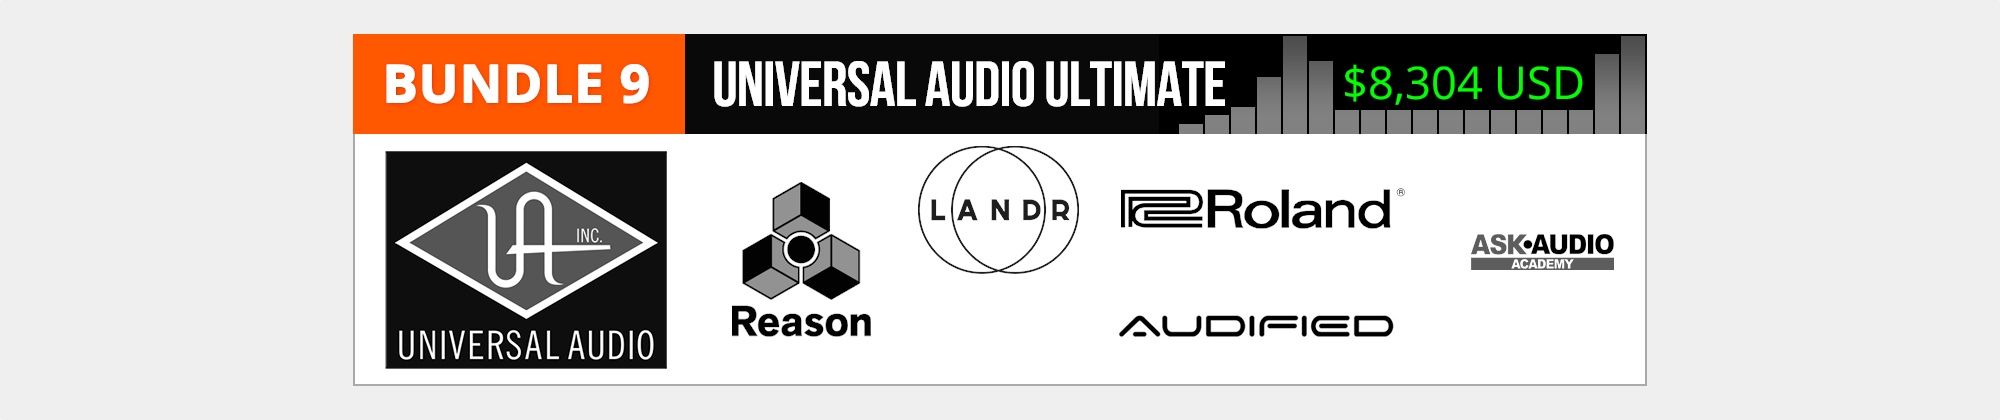 universal audio ultimate 9